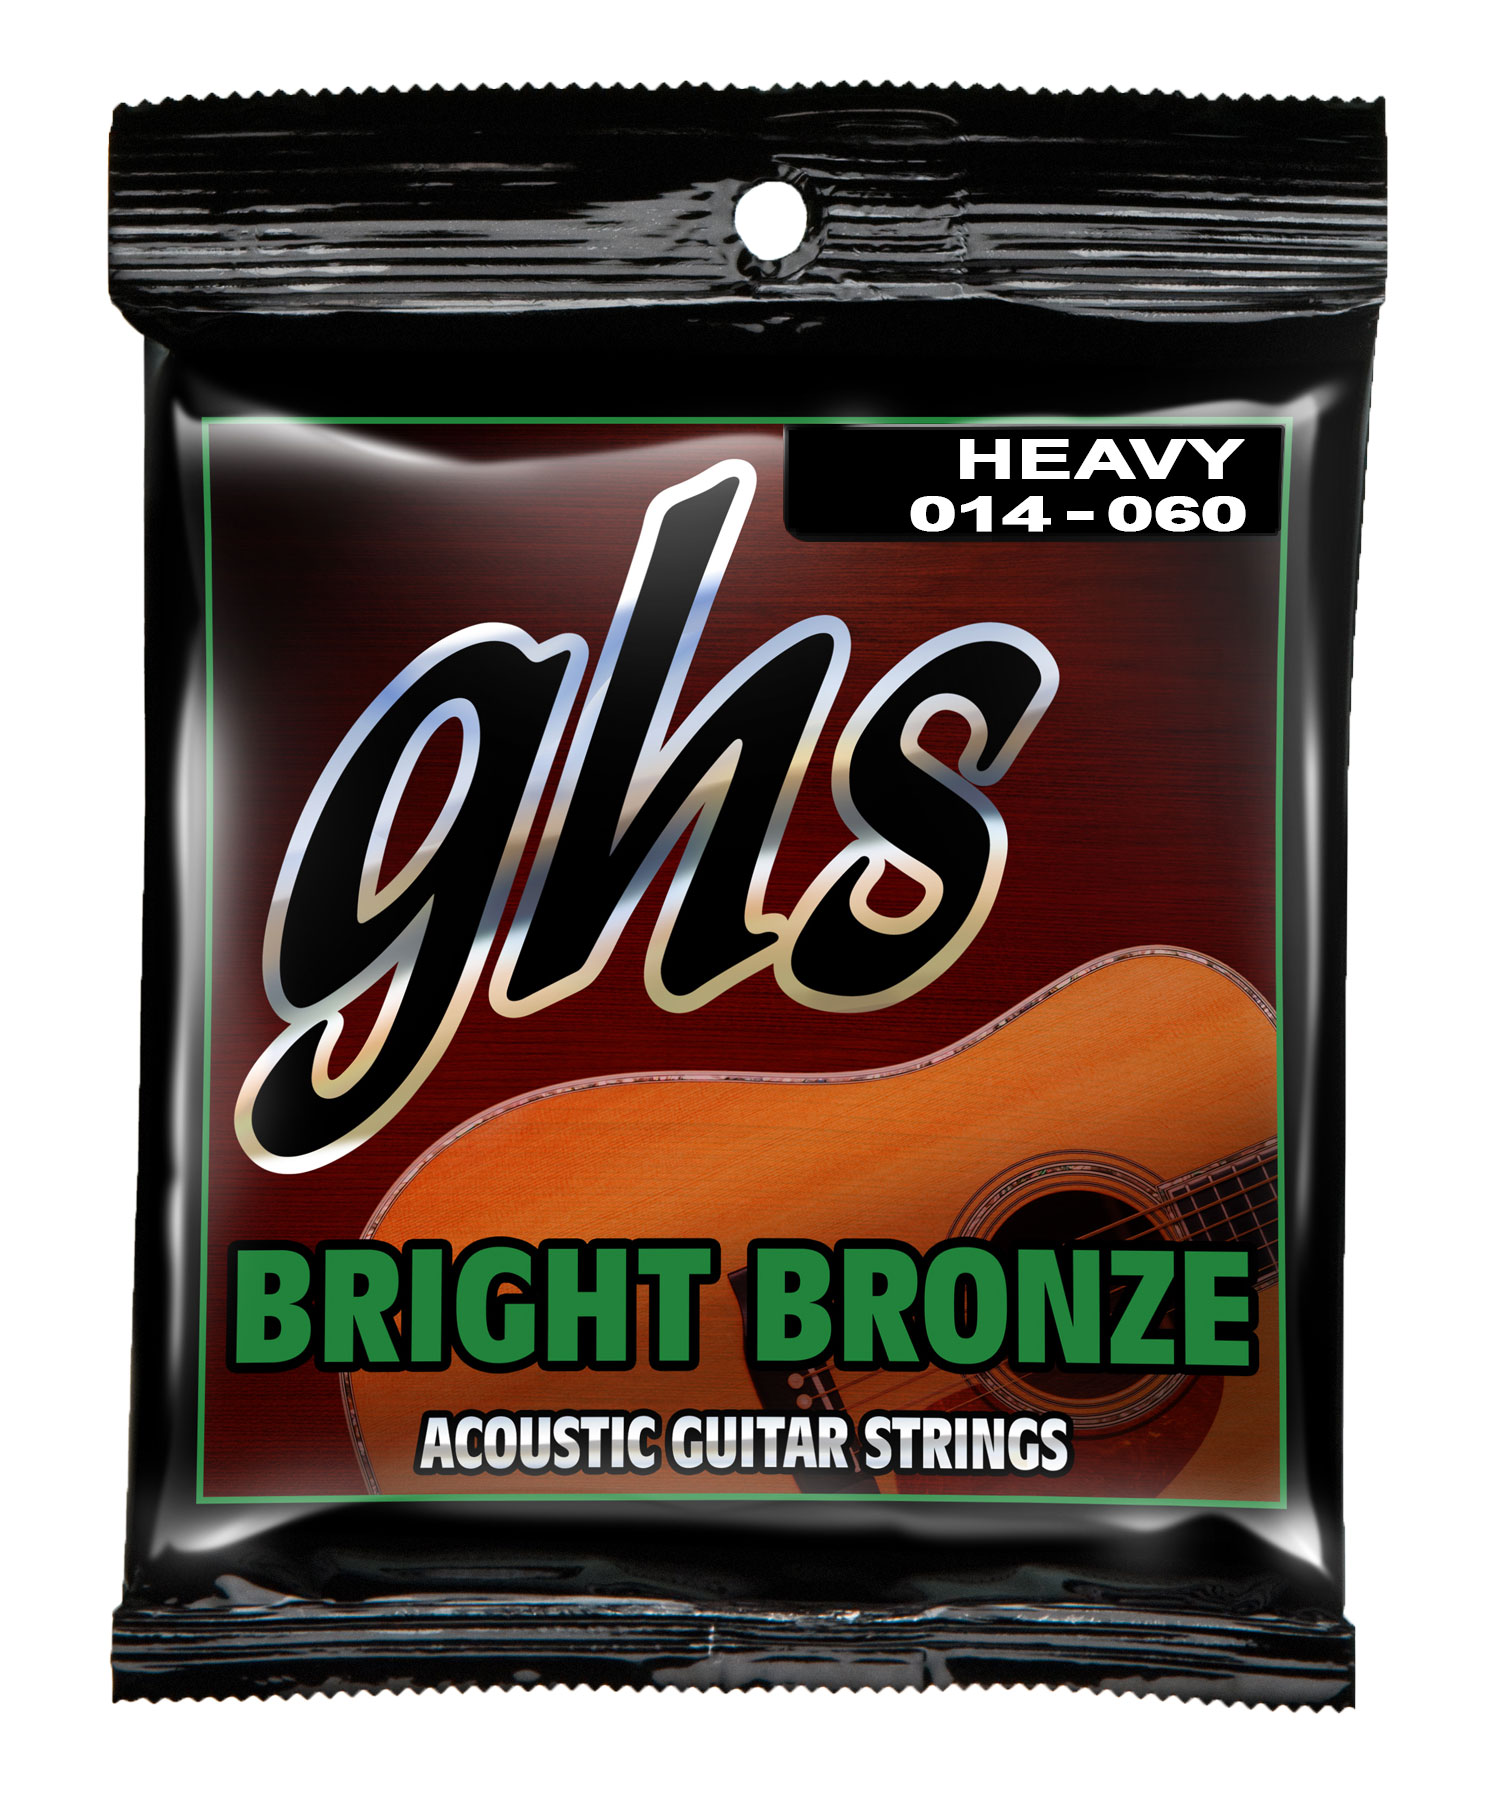 GHS Bright Bronze - BB50H - Acoustic Guitar String Set, 80/20 Bronze, Heavy, .014-.060